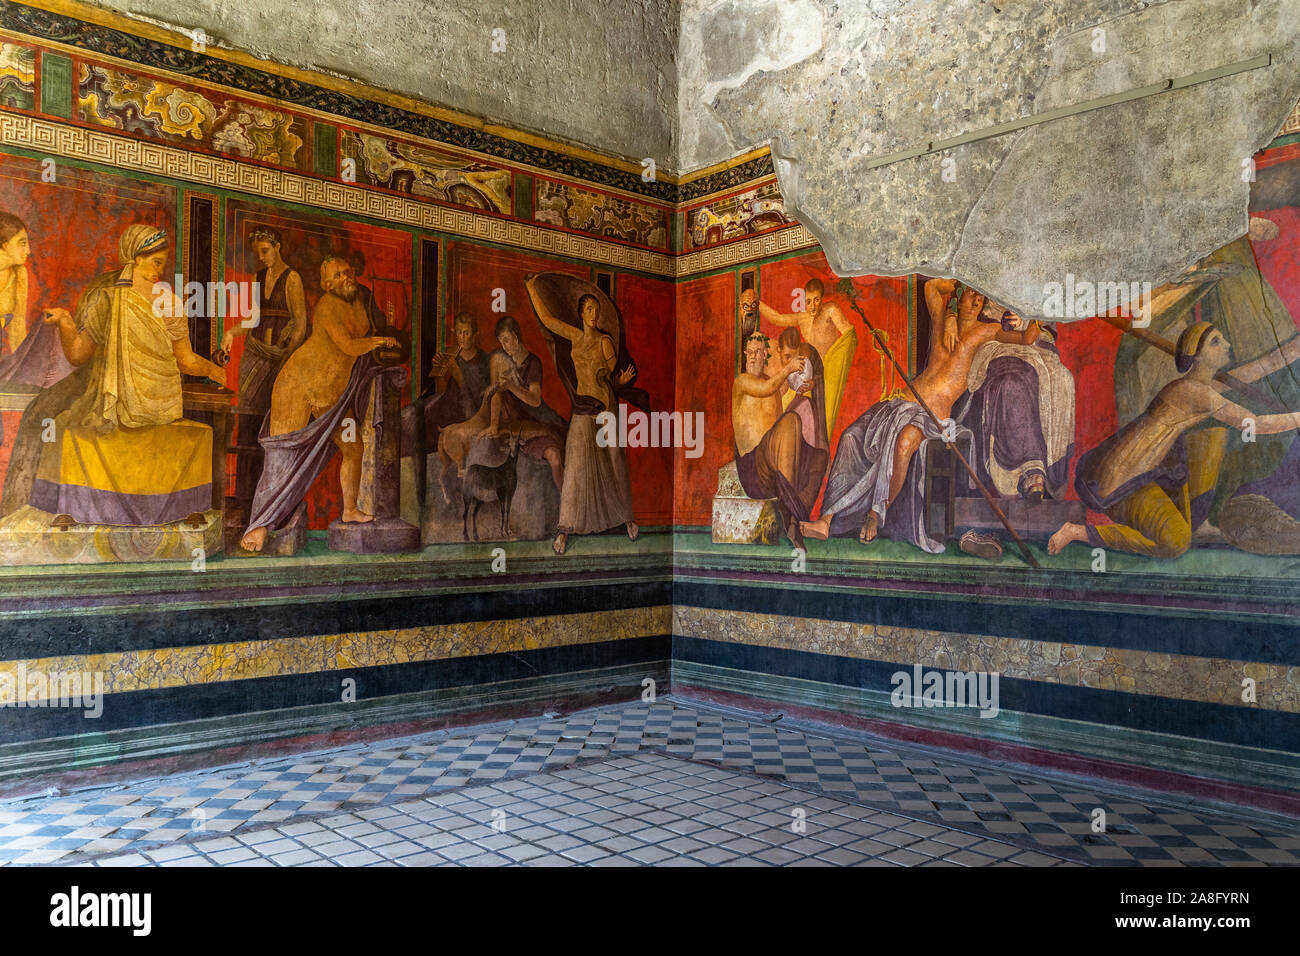 The frescoes of Villa dei Misteri (Villa of the Mysteries), an ancient Roman villa at Pompeii ancient city, Italy Stock Photo